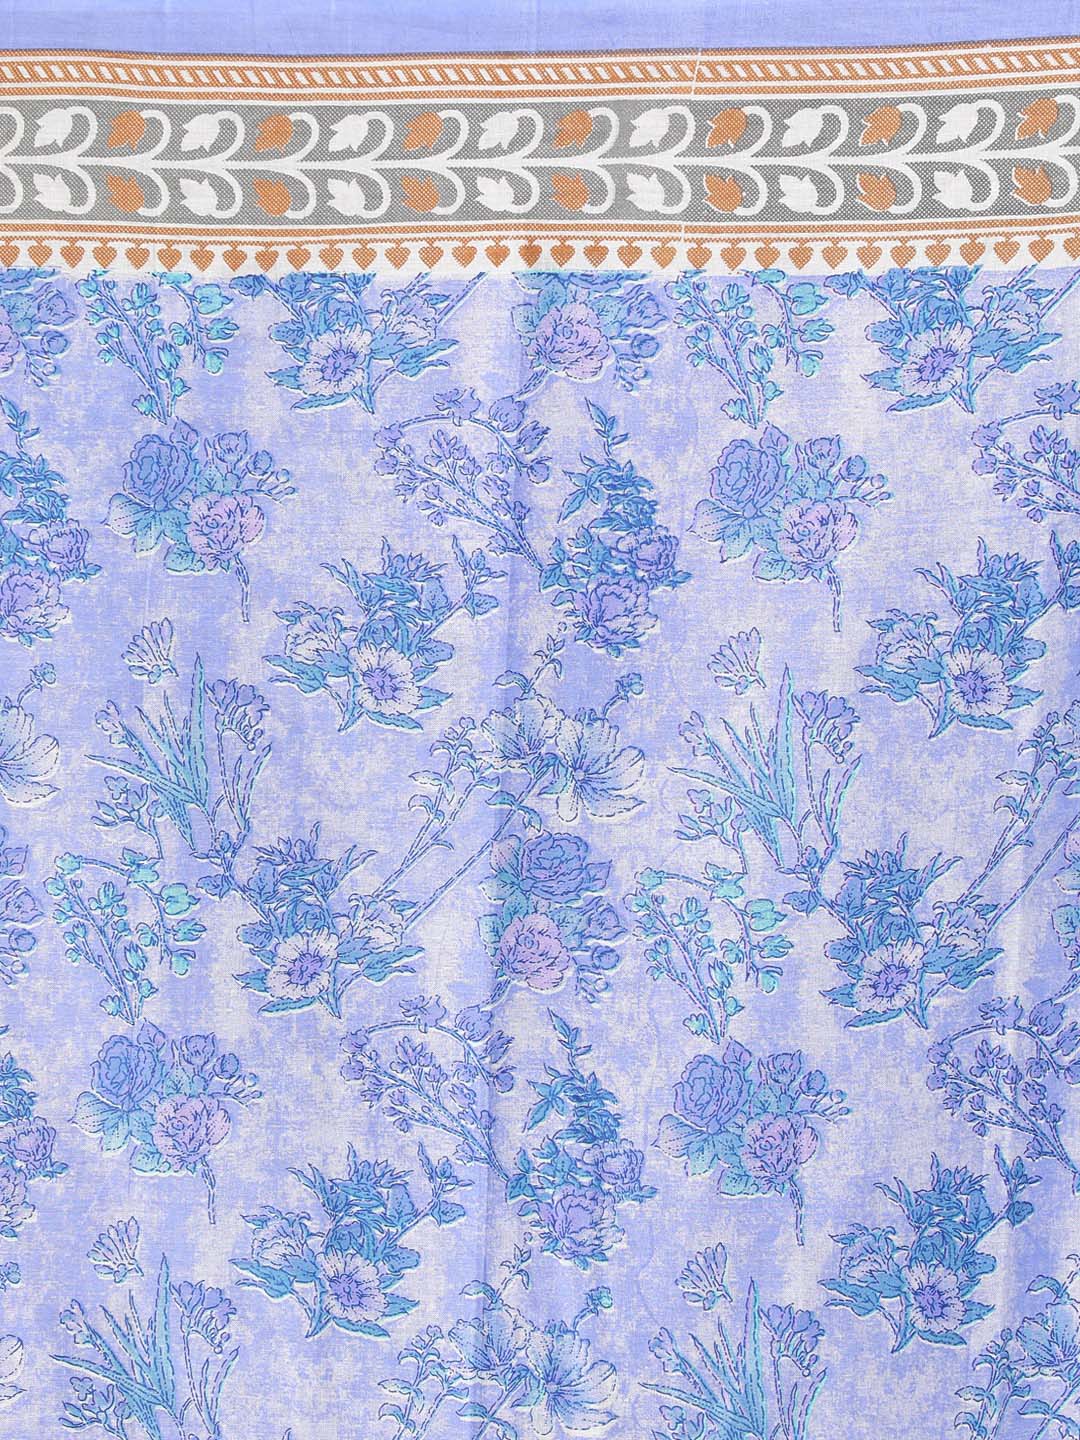 Indethnic Printed Pure Cotton Saree in Lavendar - Saree Detail View